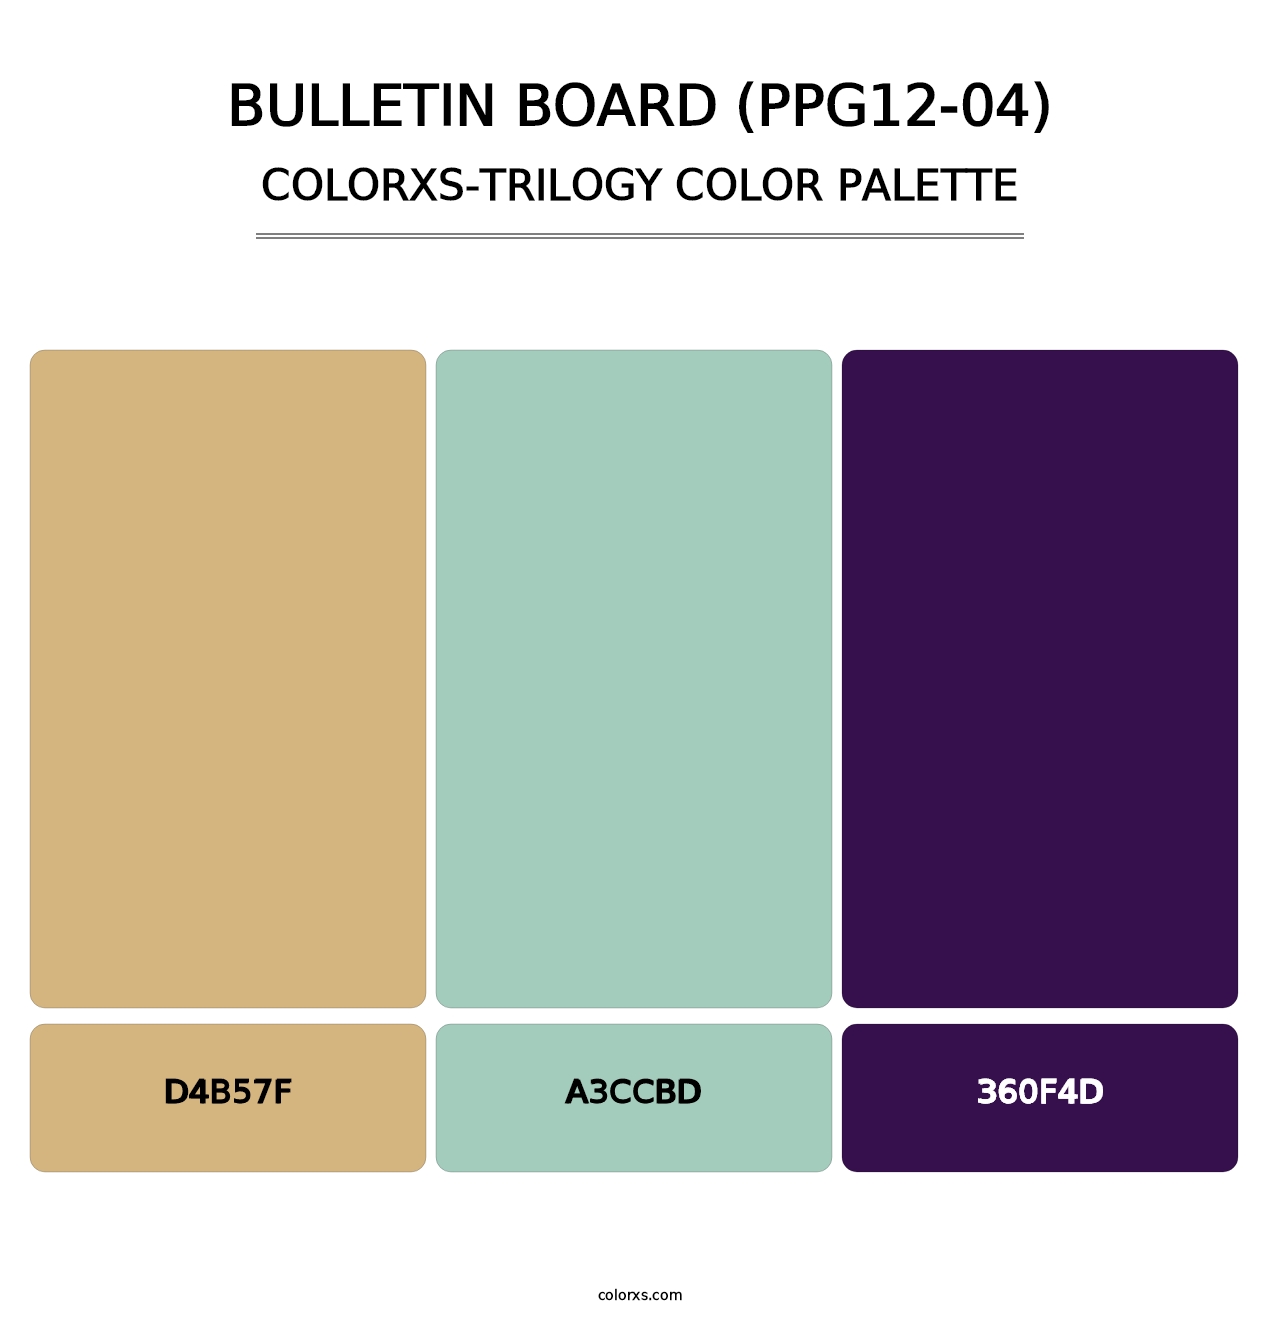 Bulletin Board (PPG12-04) - Colorxs Trilogy Palette